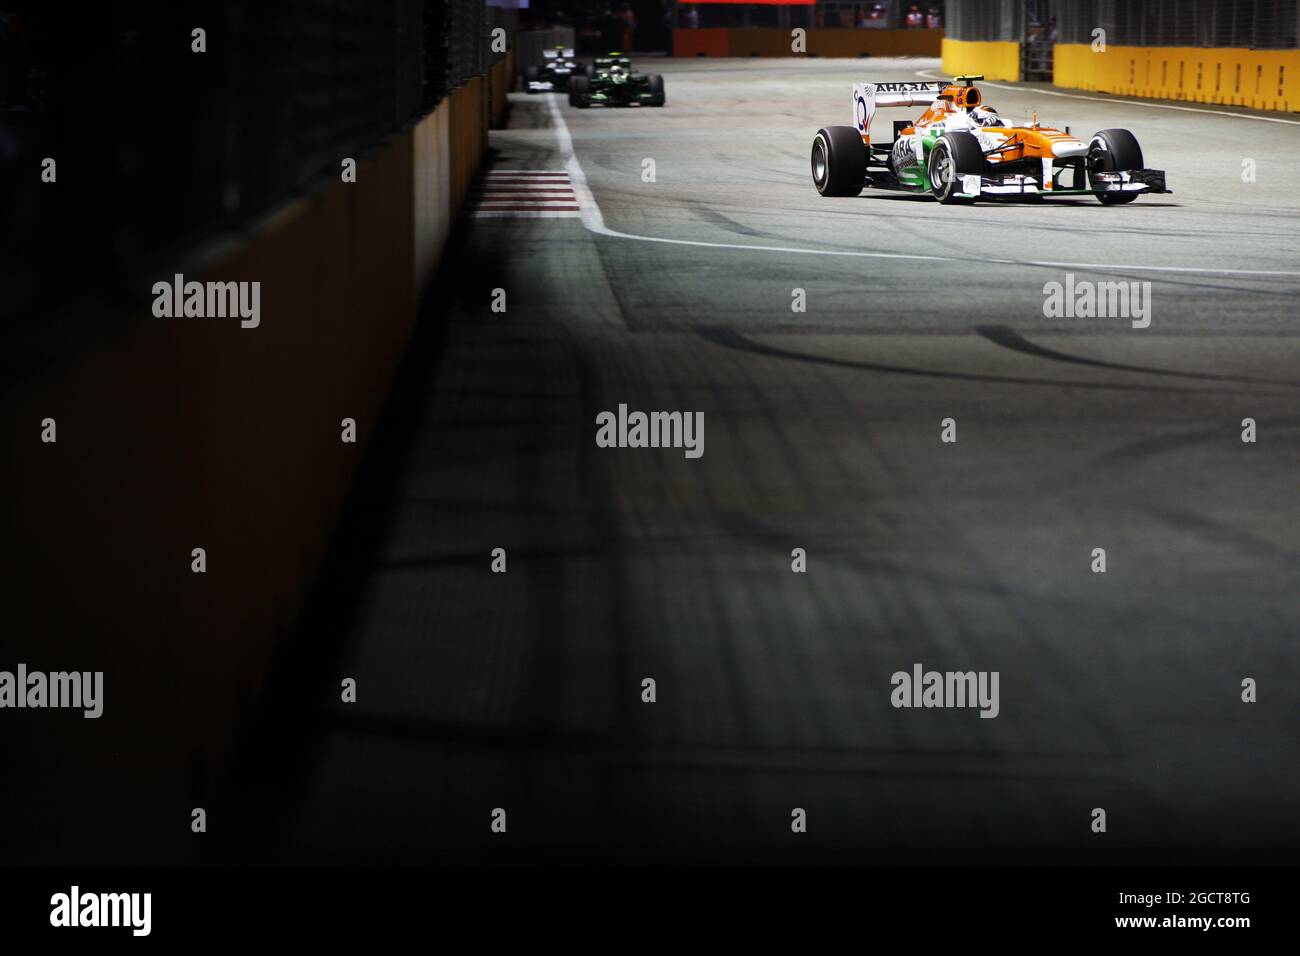 Adrian Sutil (GER) Sahara Force India VJM06. Gran Premio di Singapore, domenica 22 settembre 2013. Circuito Marina Bay Street, Singapore. Foto Stock